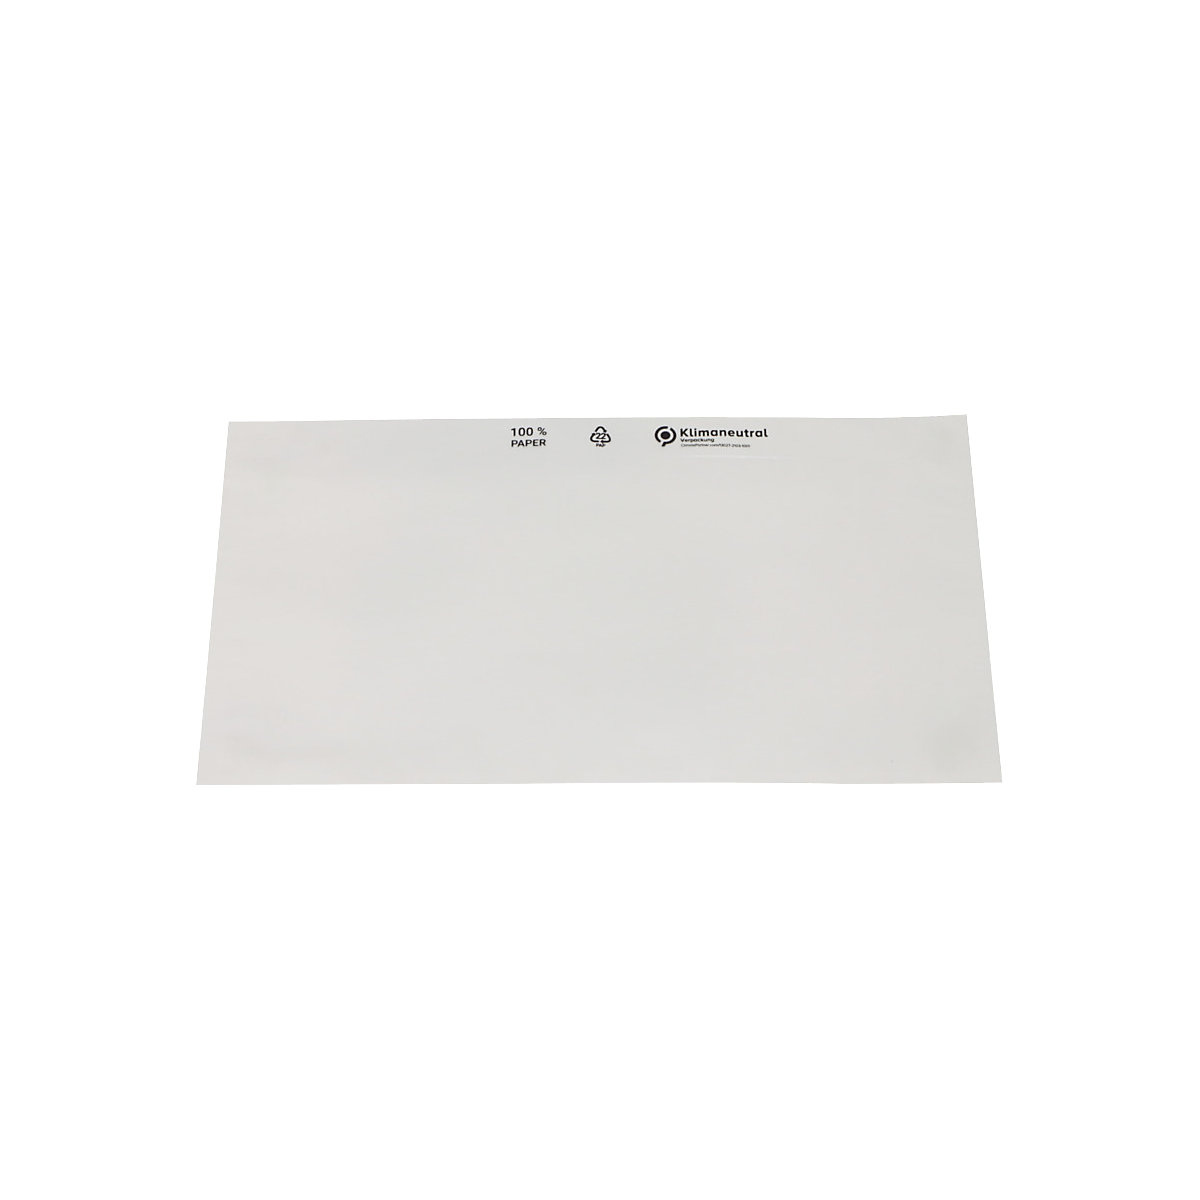 Dokumententaschen aus Papier terra, Transparent, VE 1000 Stk, LxB 240 x 131 mm, ab 10 VE-1